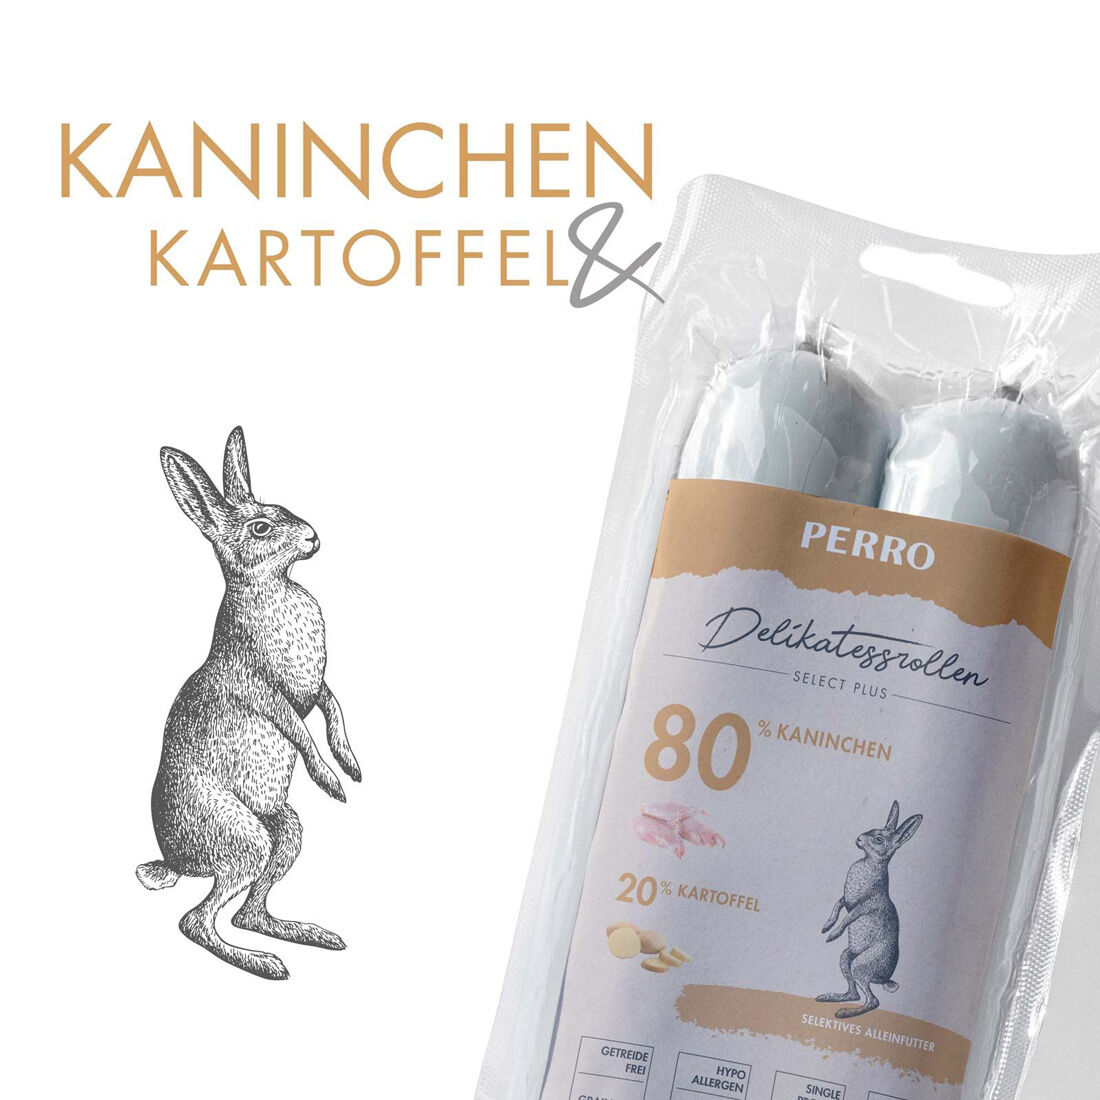 PERRO-Delikatessrolle-Kaninchen-Kartoffel-Hundewurst-Training-181562